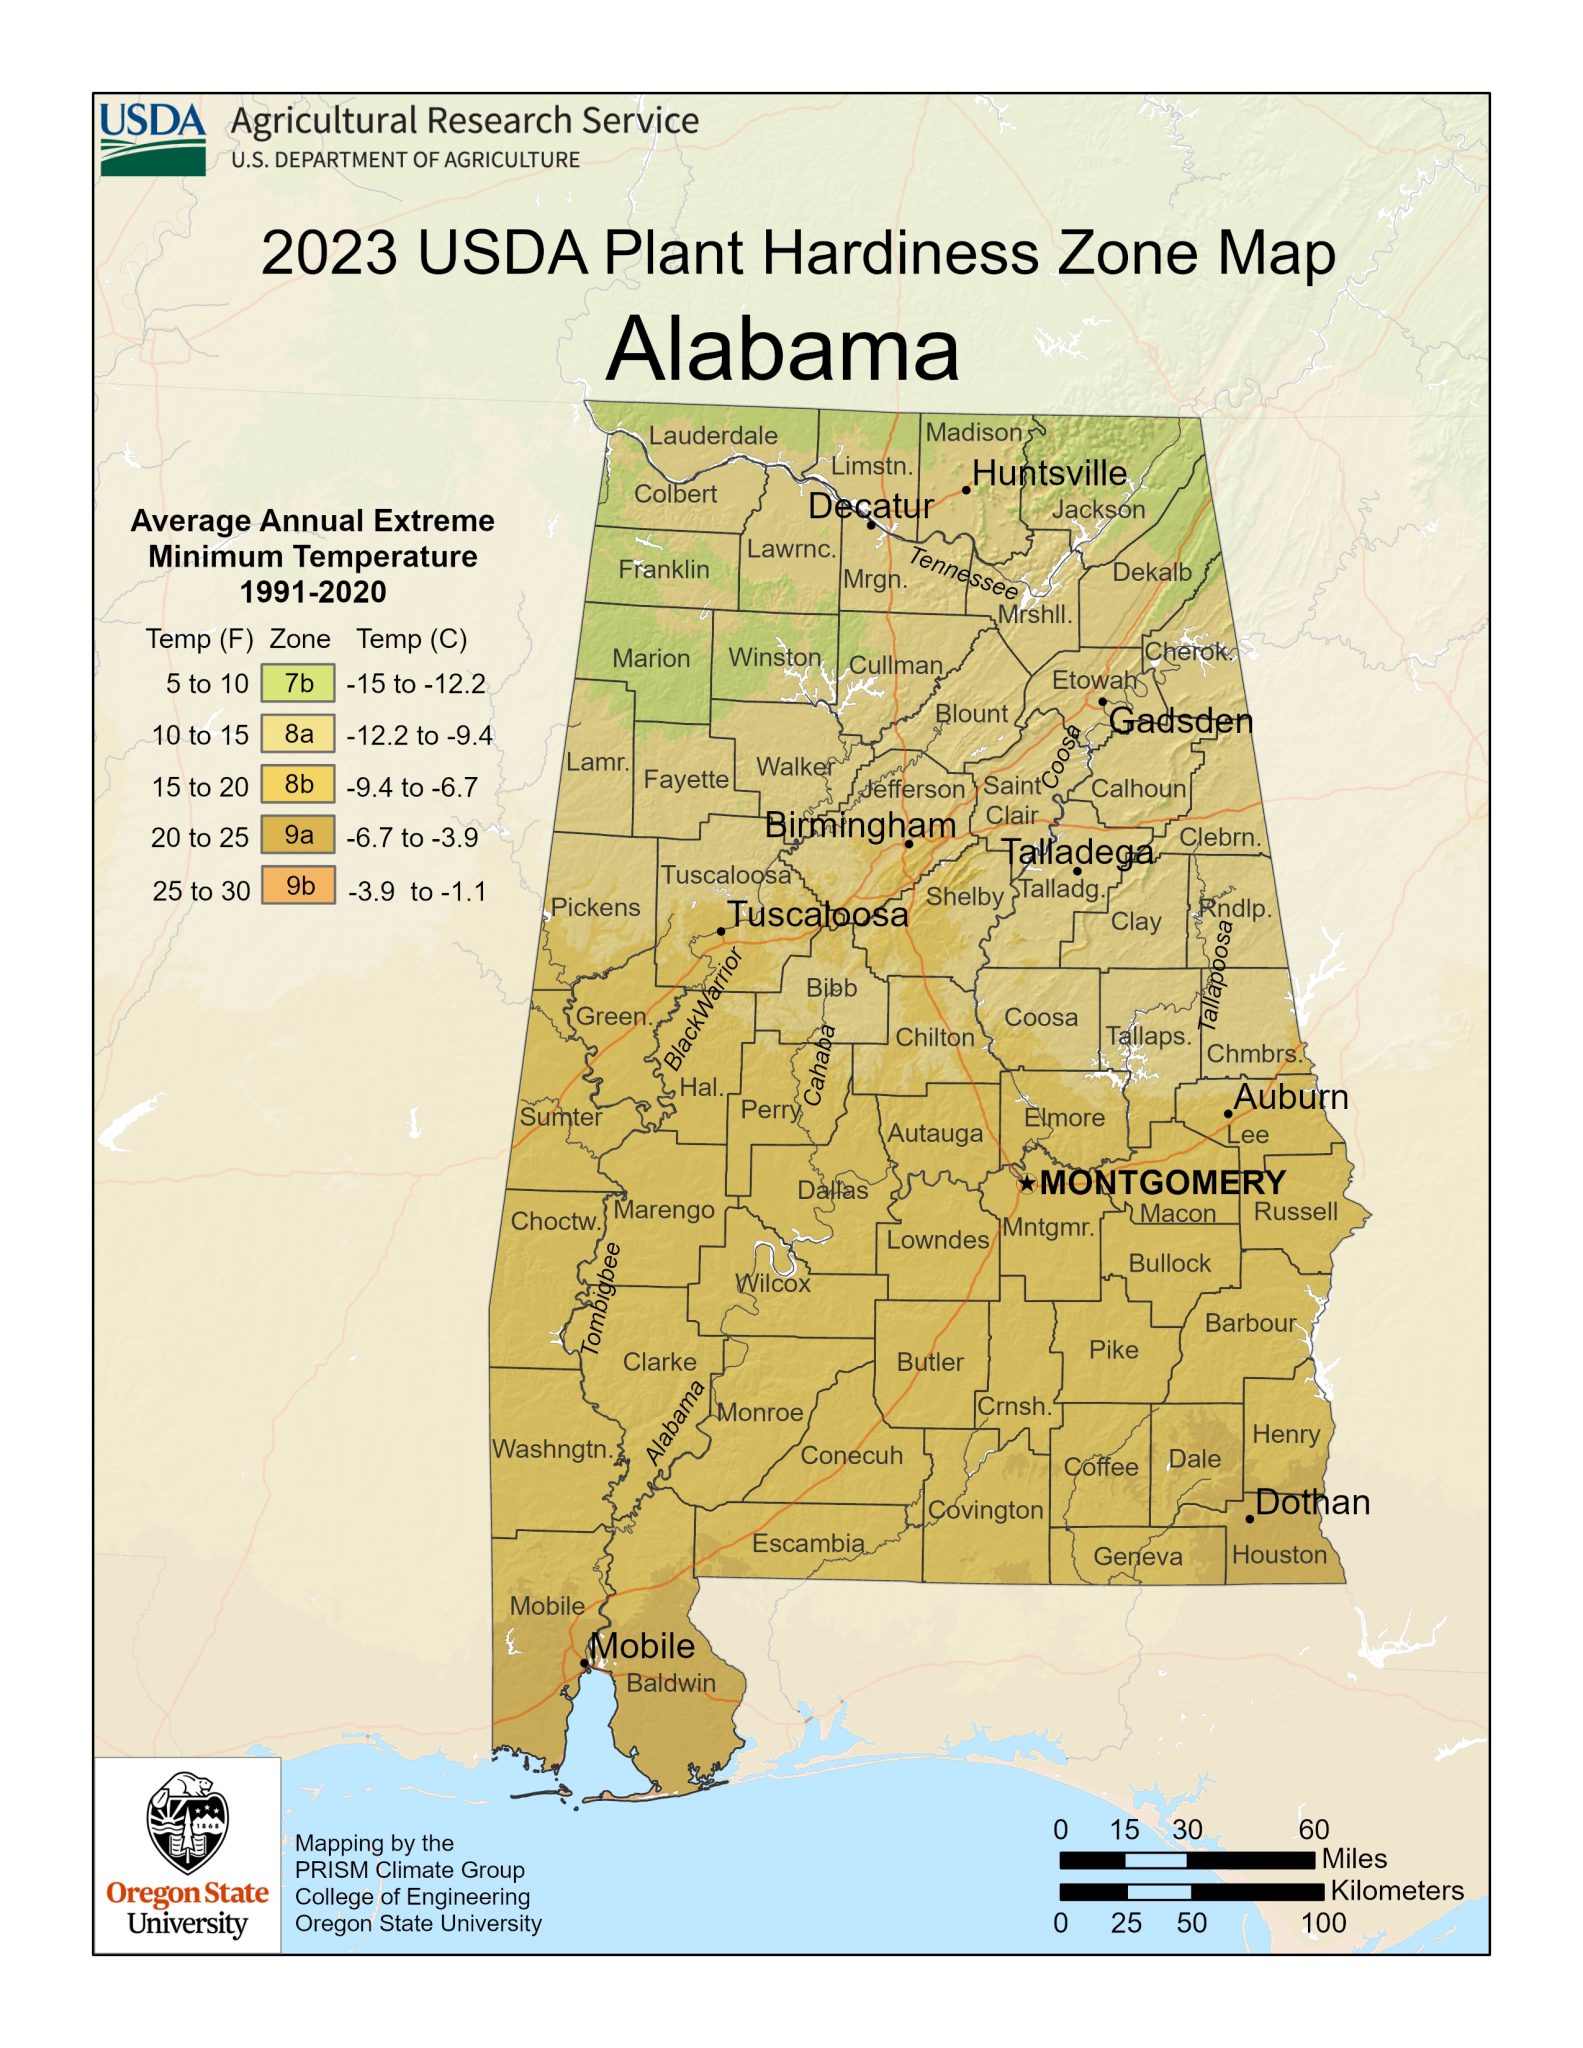 USDA Releases New Hardiness Zone Map for United States - Alabama ...